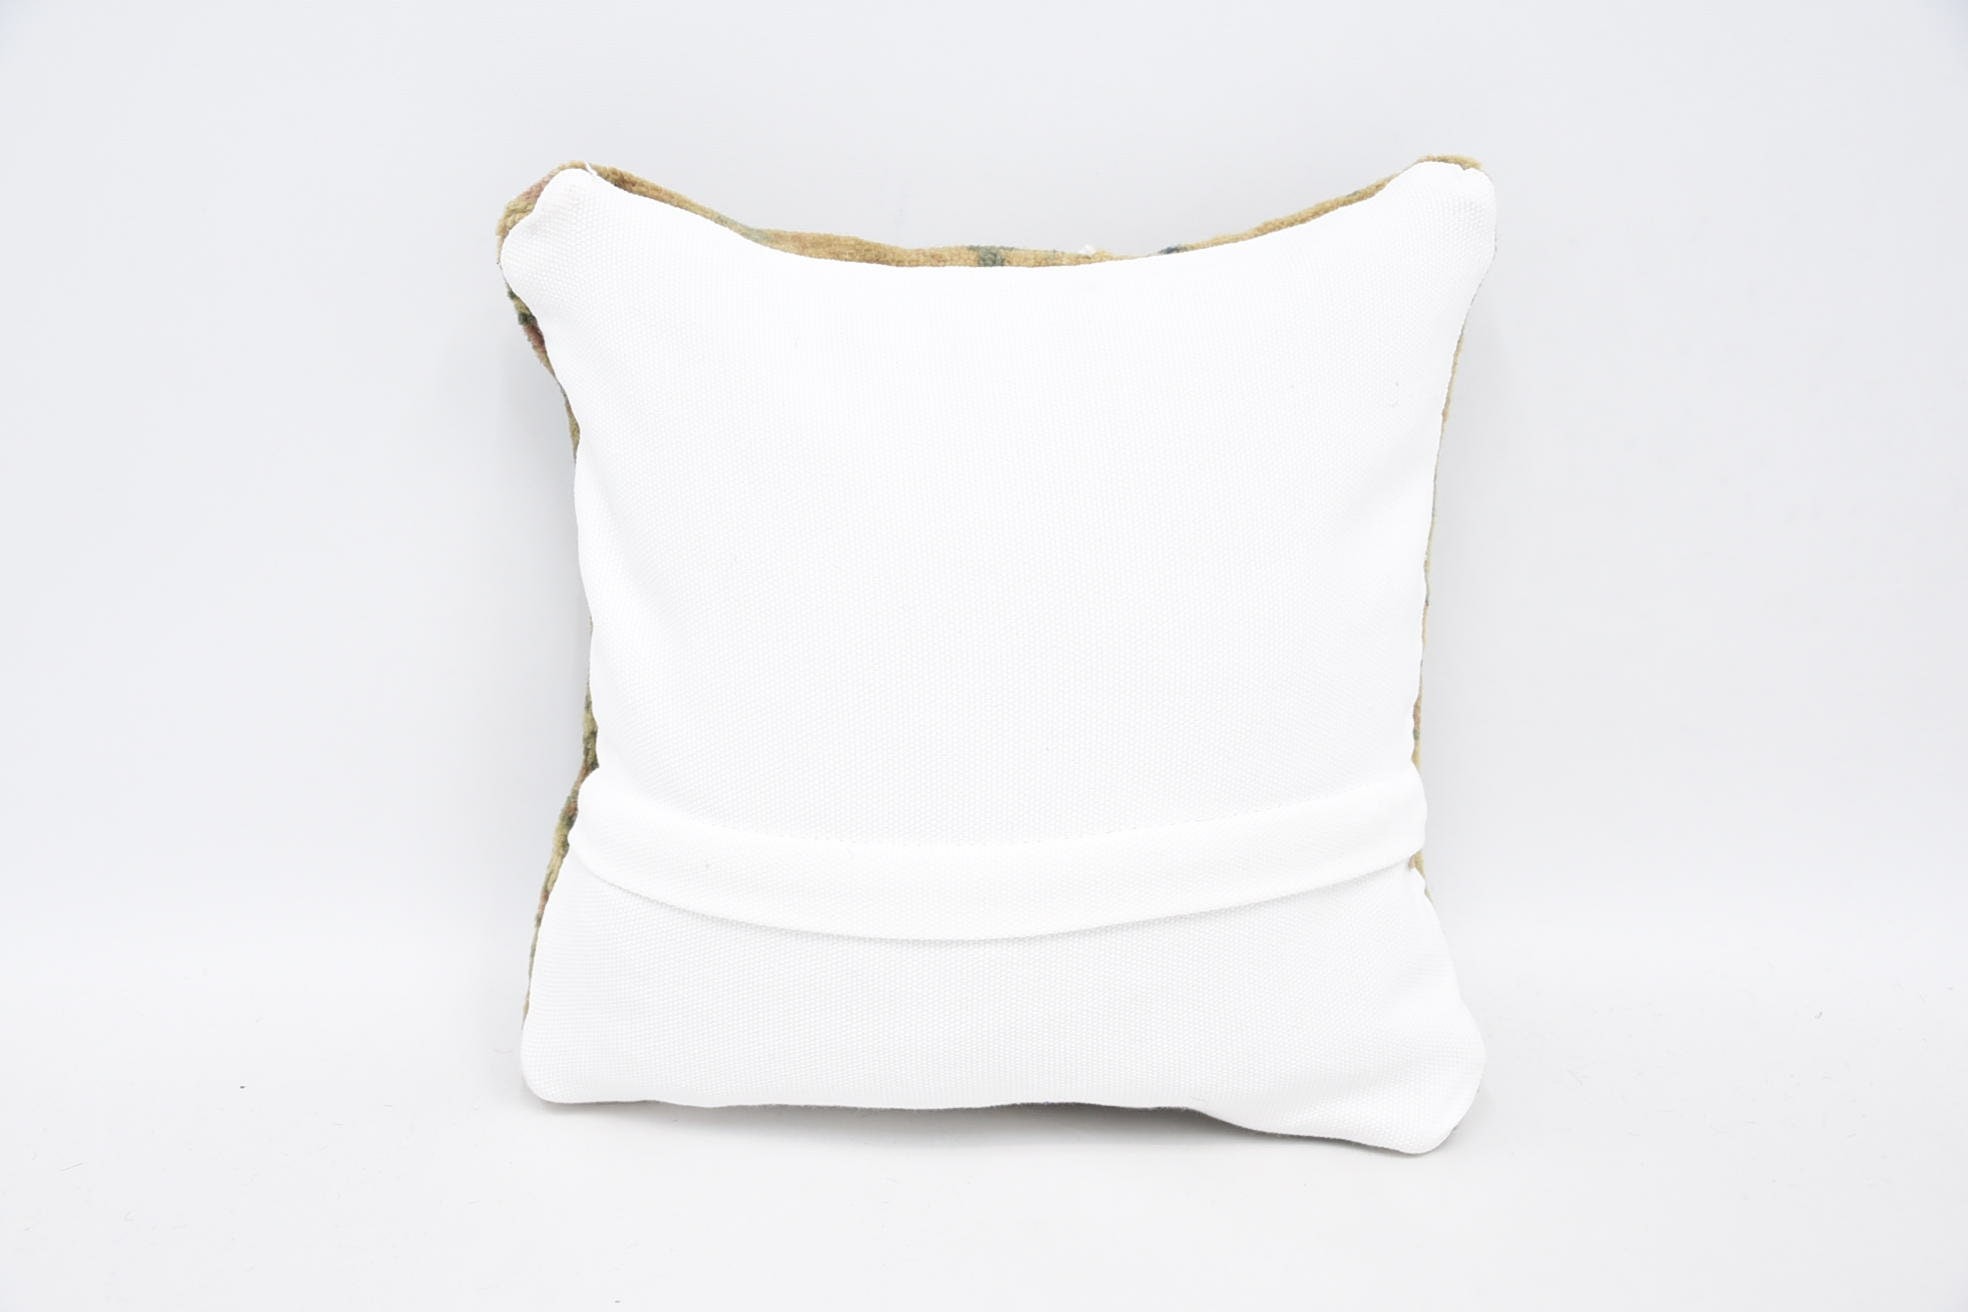 Shabby Chic Pillow, Turkish Kilim Pillow, Turkish Pillow, Decorative Pillow Cover, 12"x12" Beige Pillow, Kilim Cushion Sham, Pastel Pillow